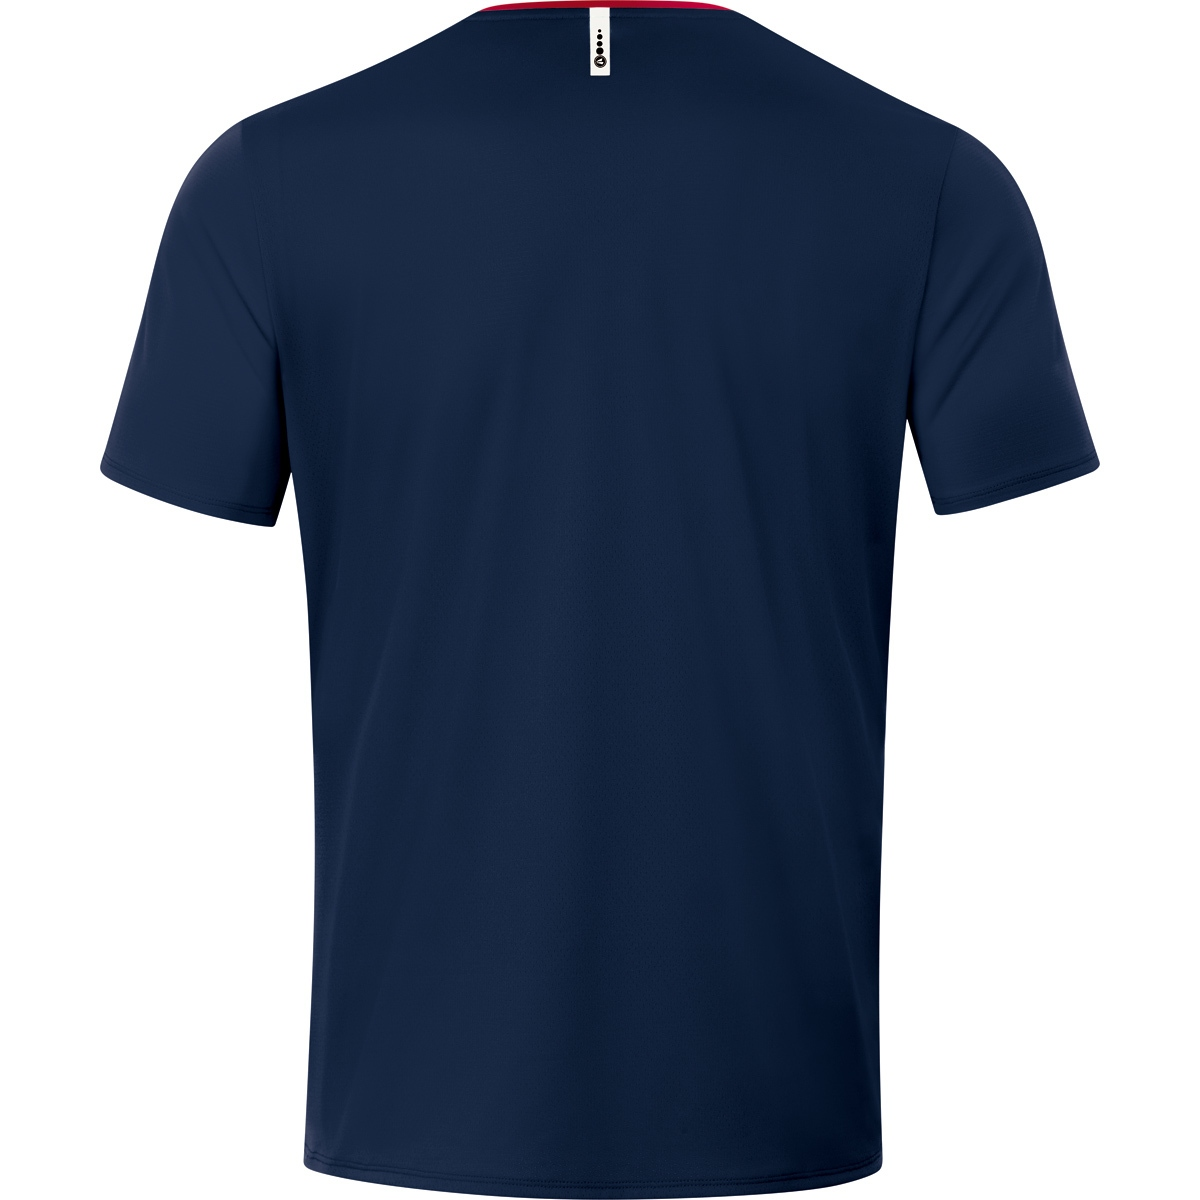 JAKO T-Shirt Champ 2.0 marine/chili rot, Gr. 140, Kinder, 6120